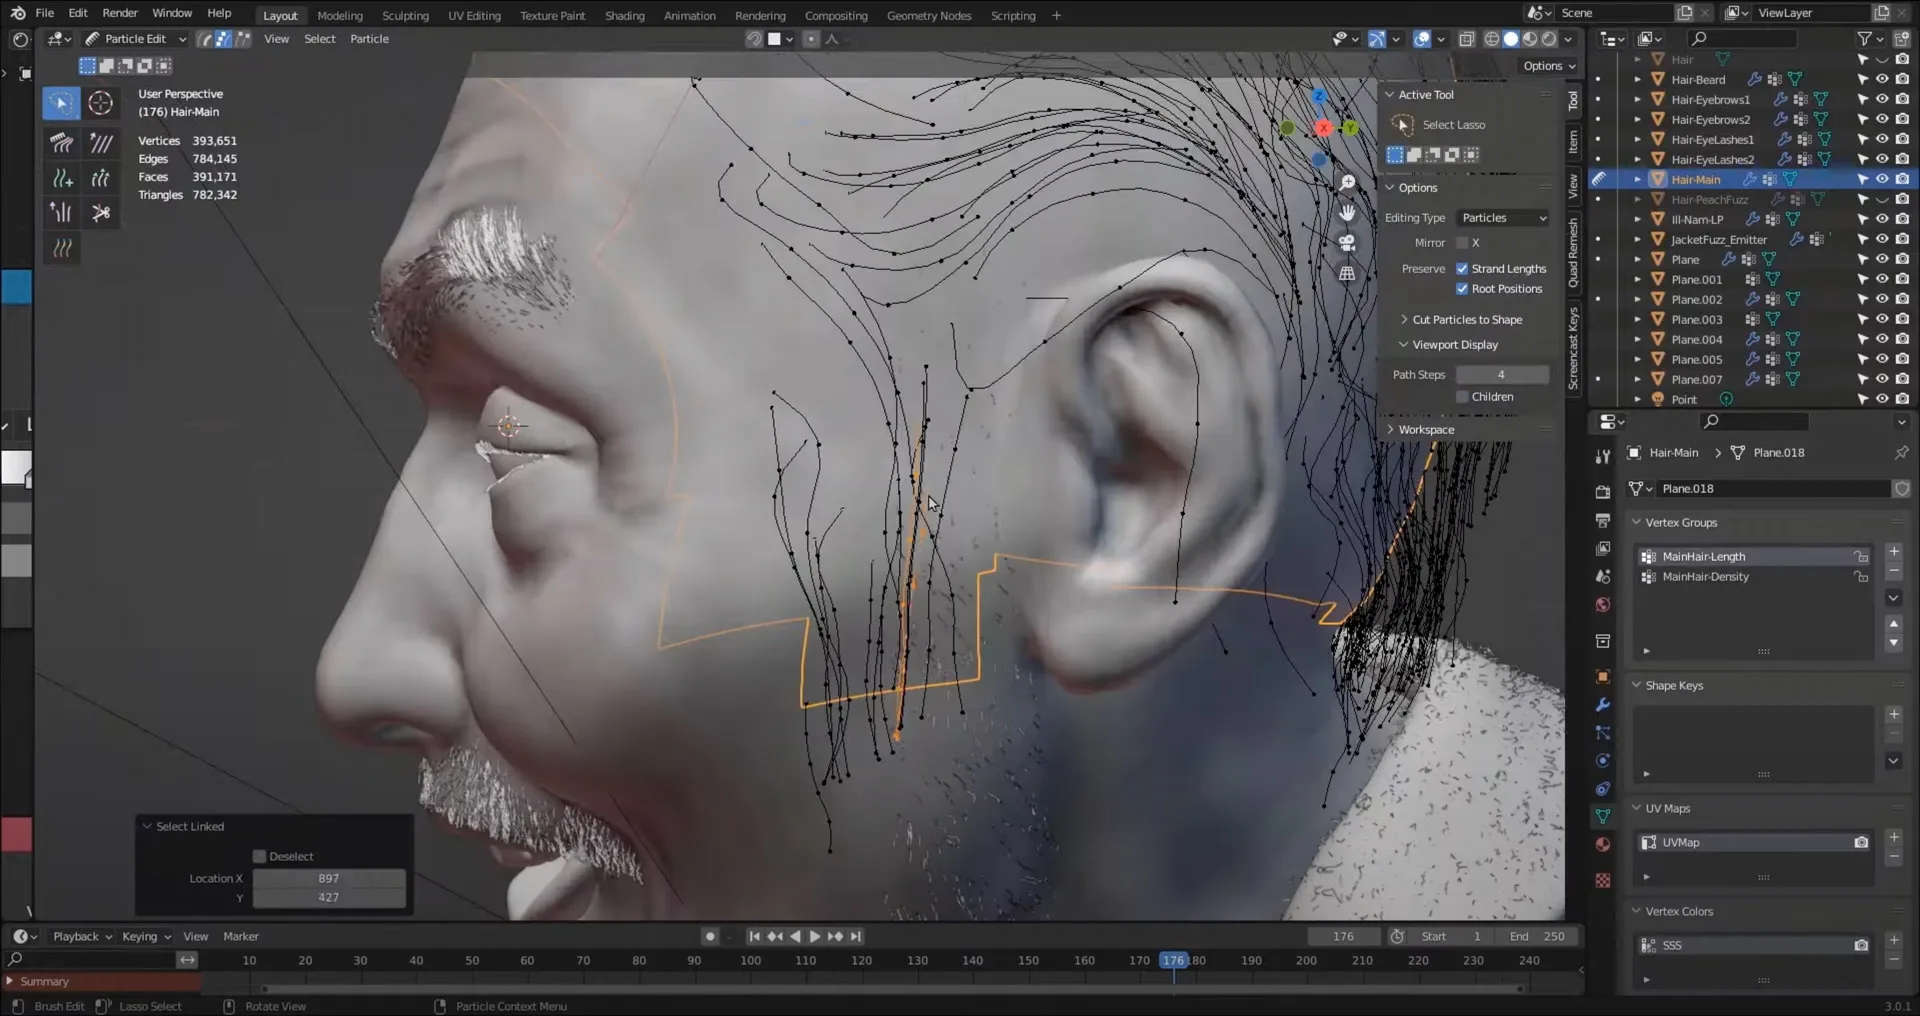 Facial Anatomy & Portrait for Blender Artists